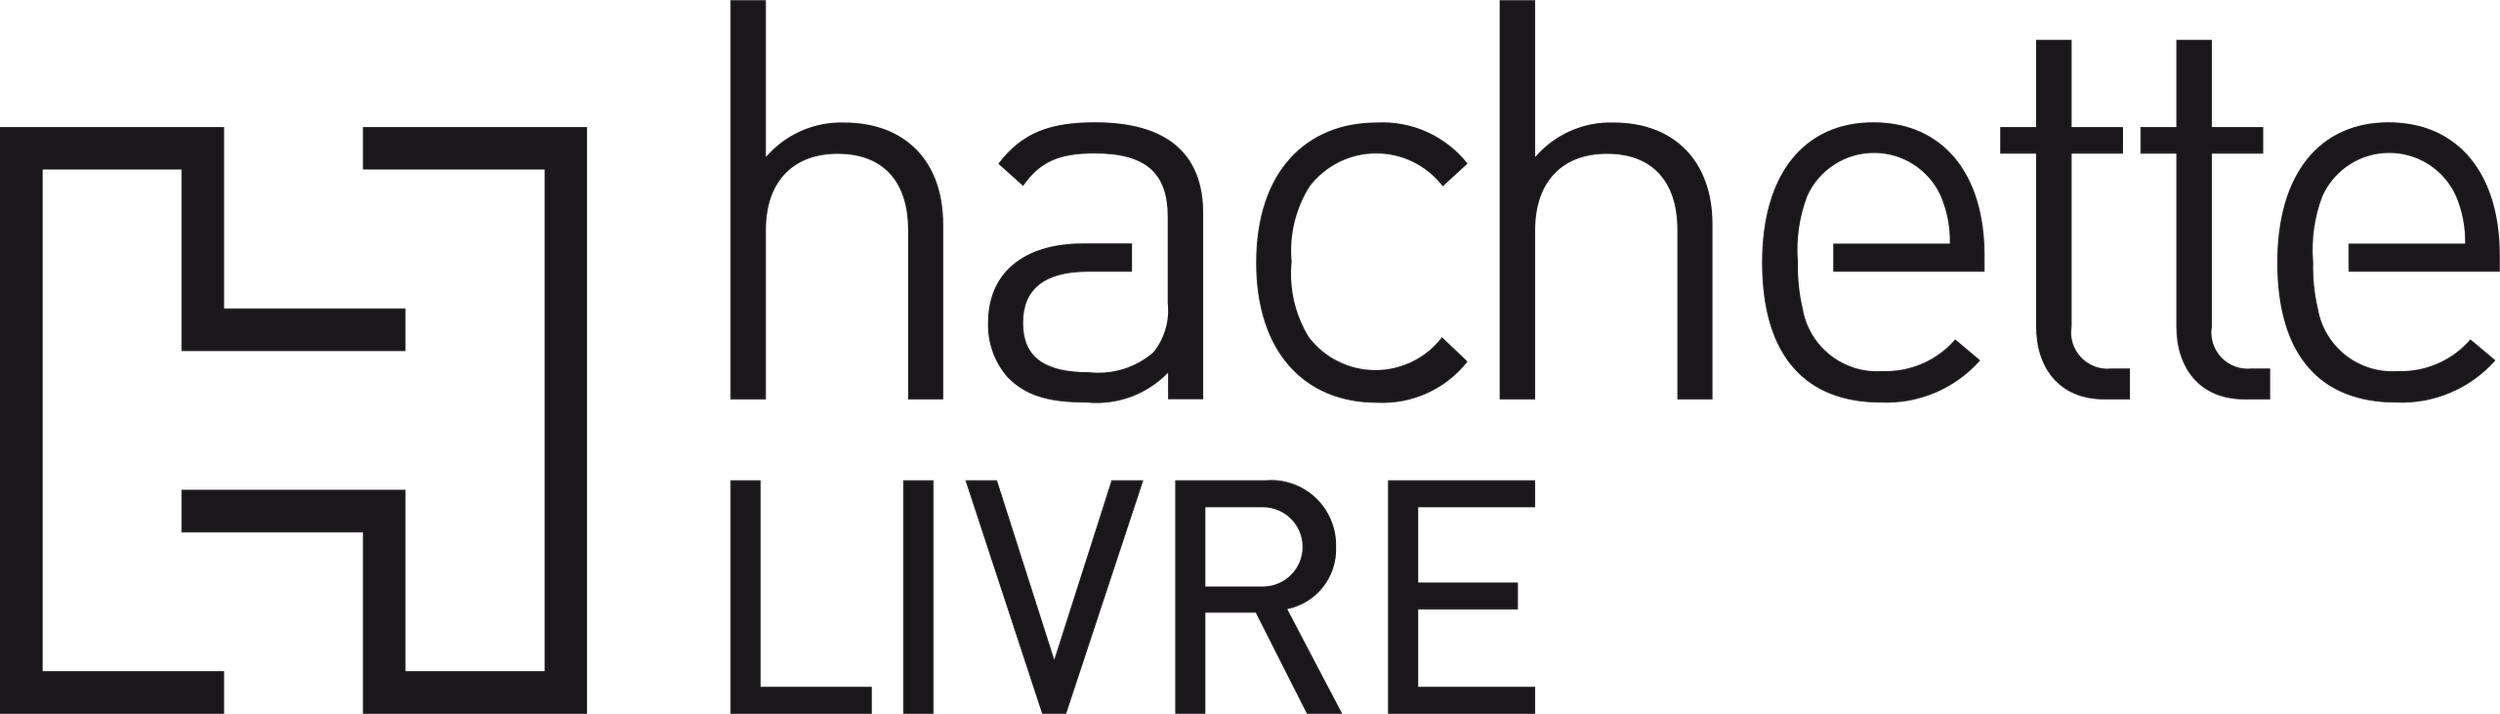 Hachette_logo.svg.png